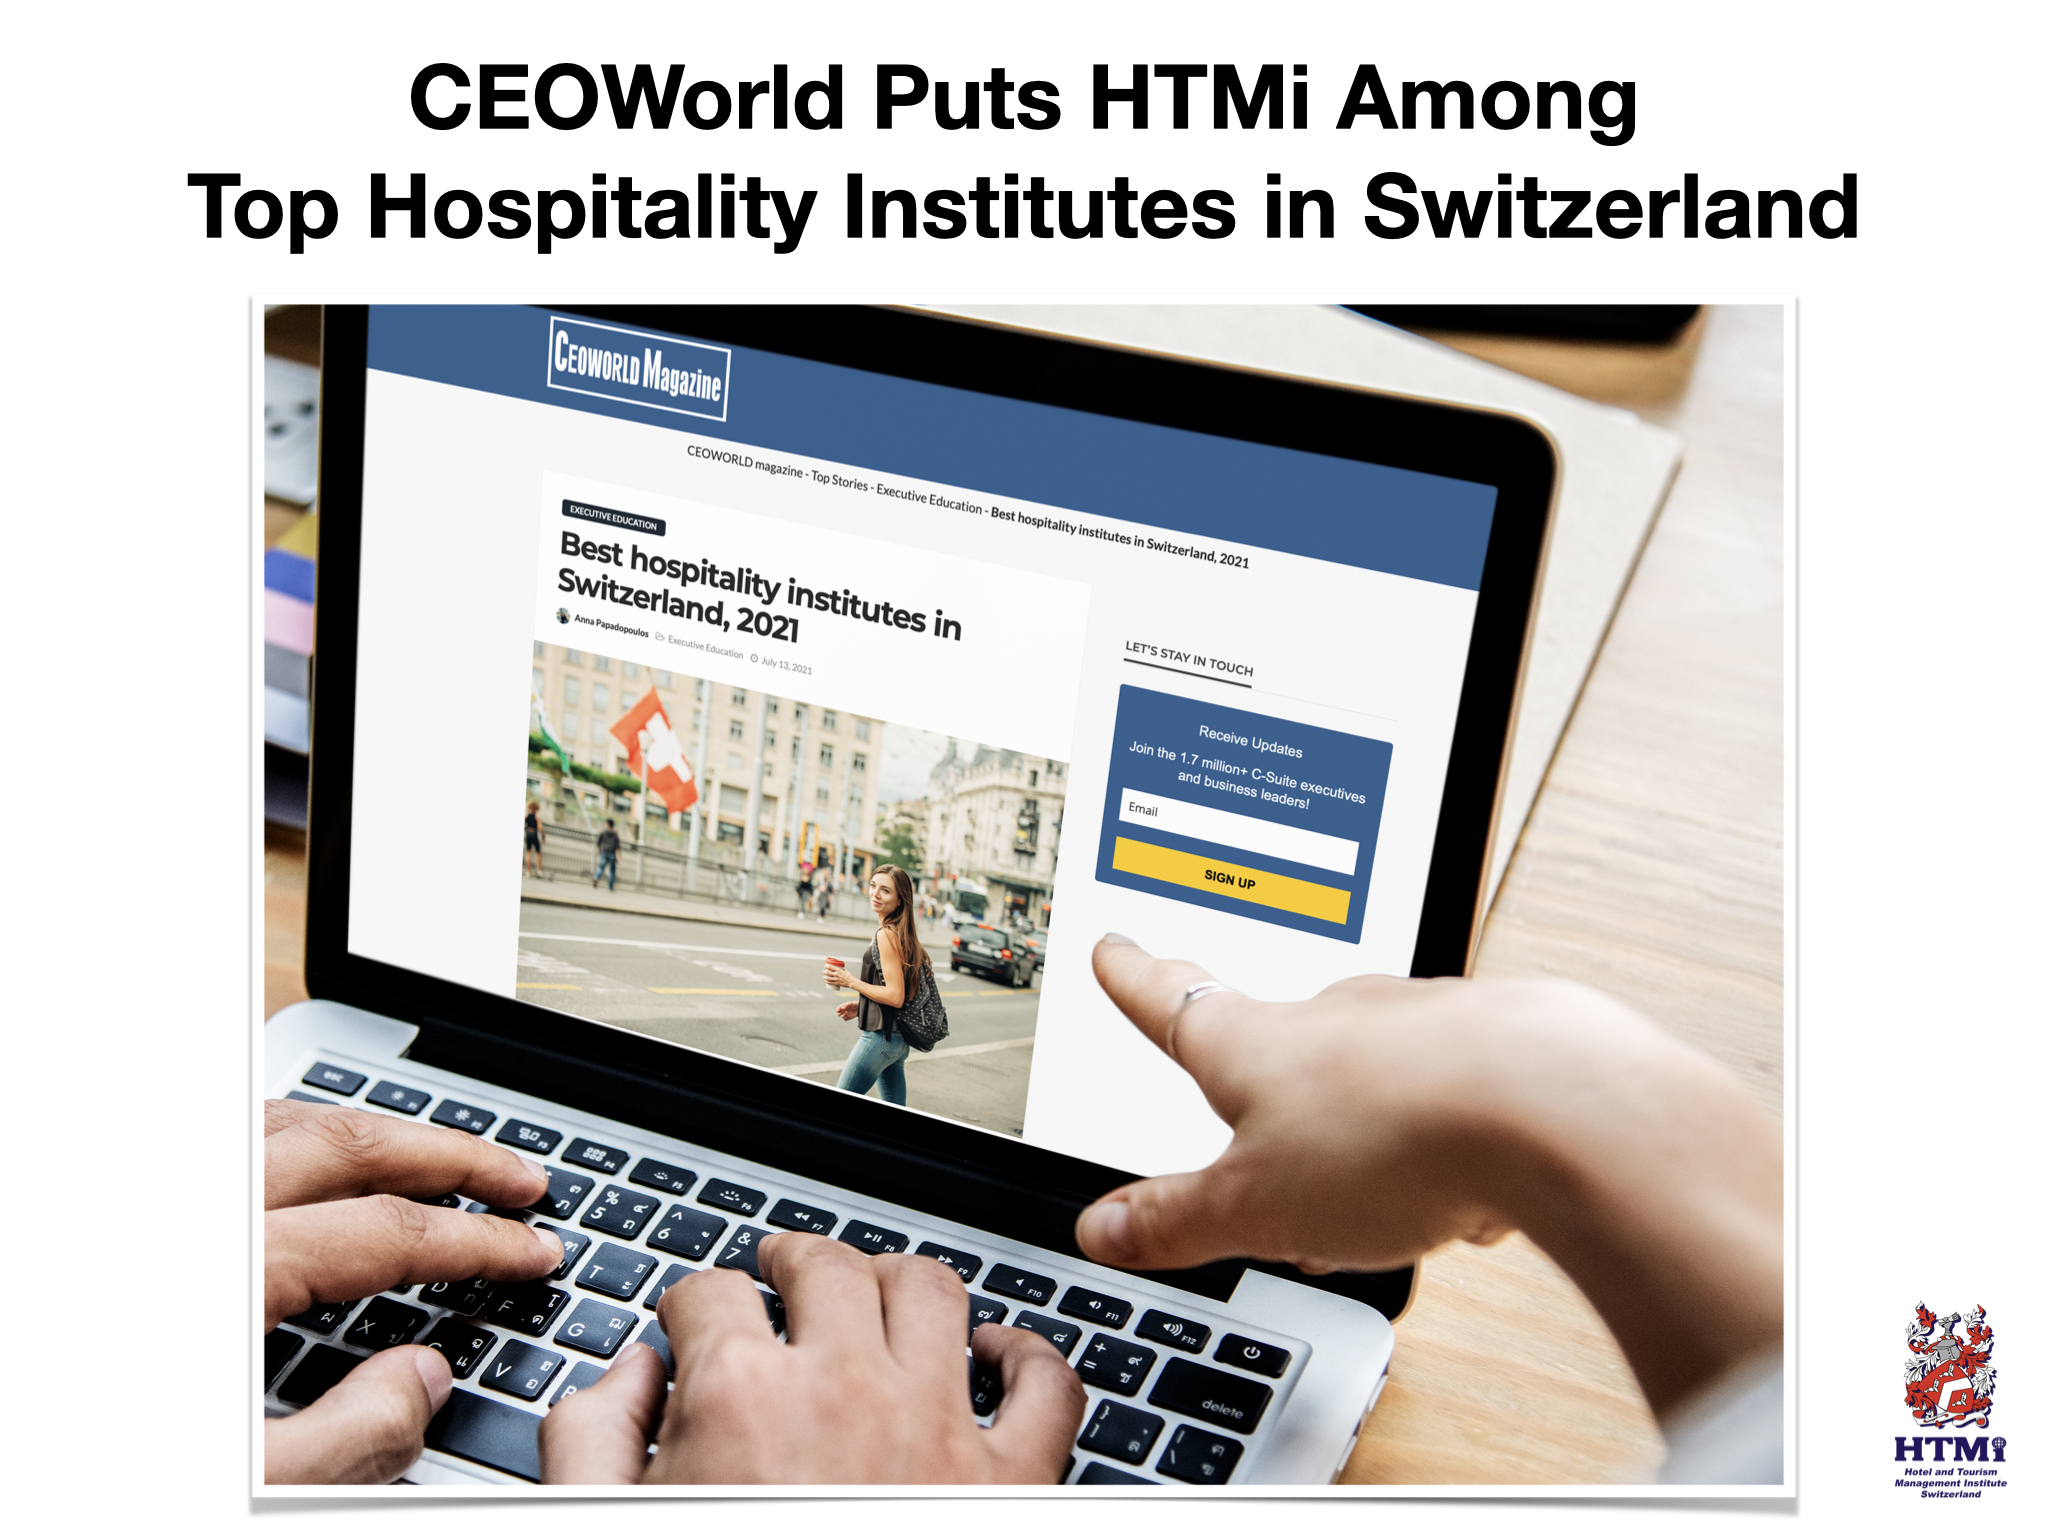 HTMi Among Top Hospitality Institutes in Switzerland